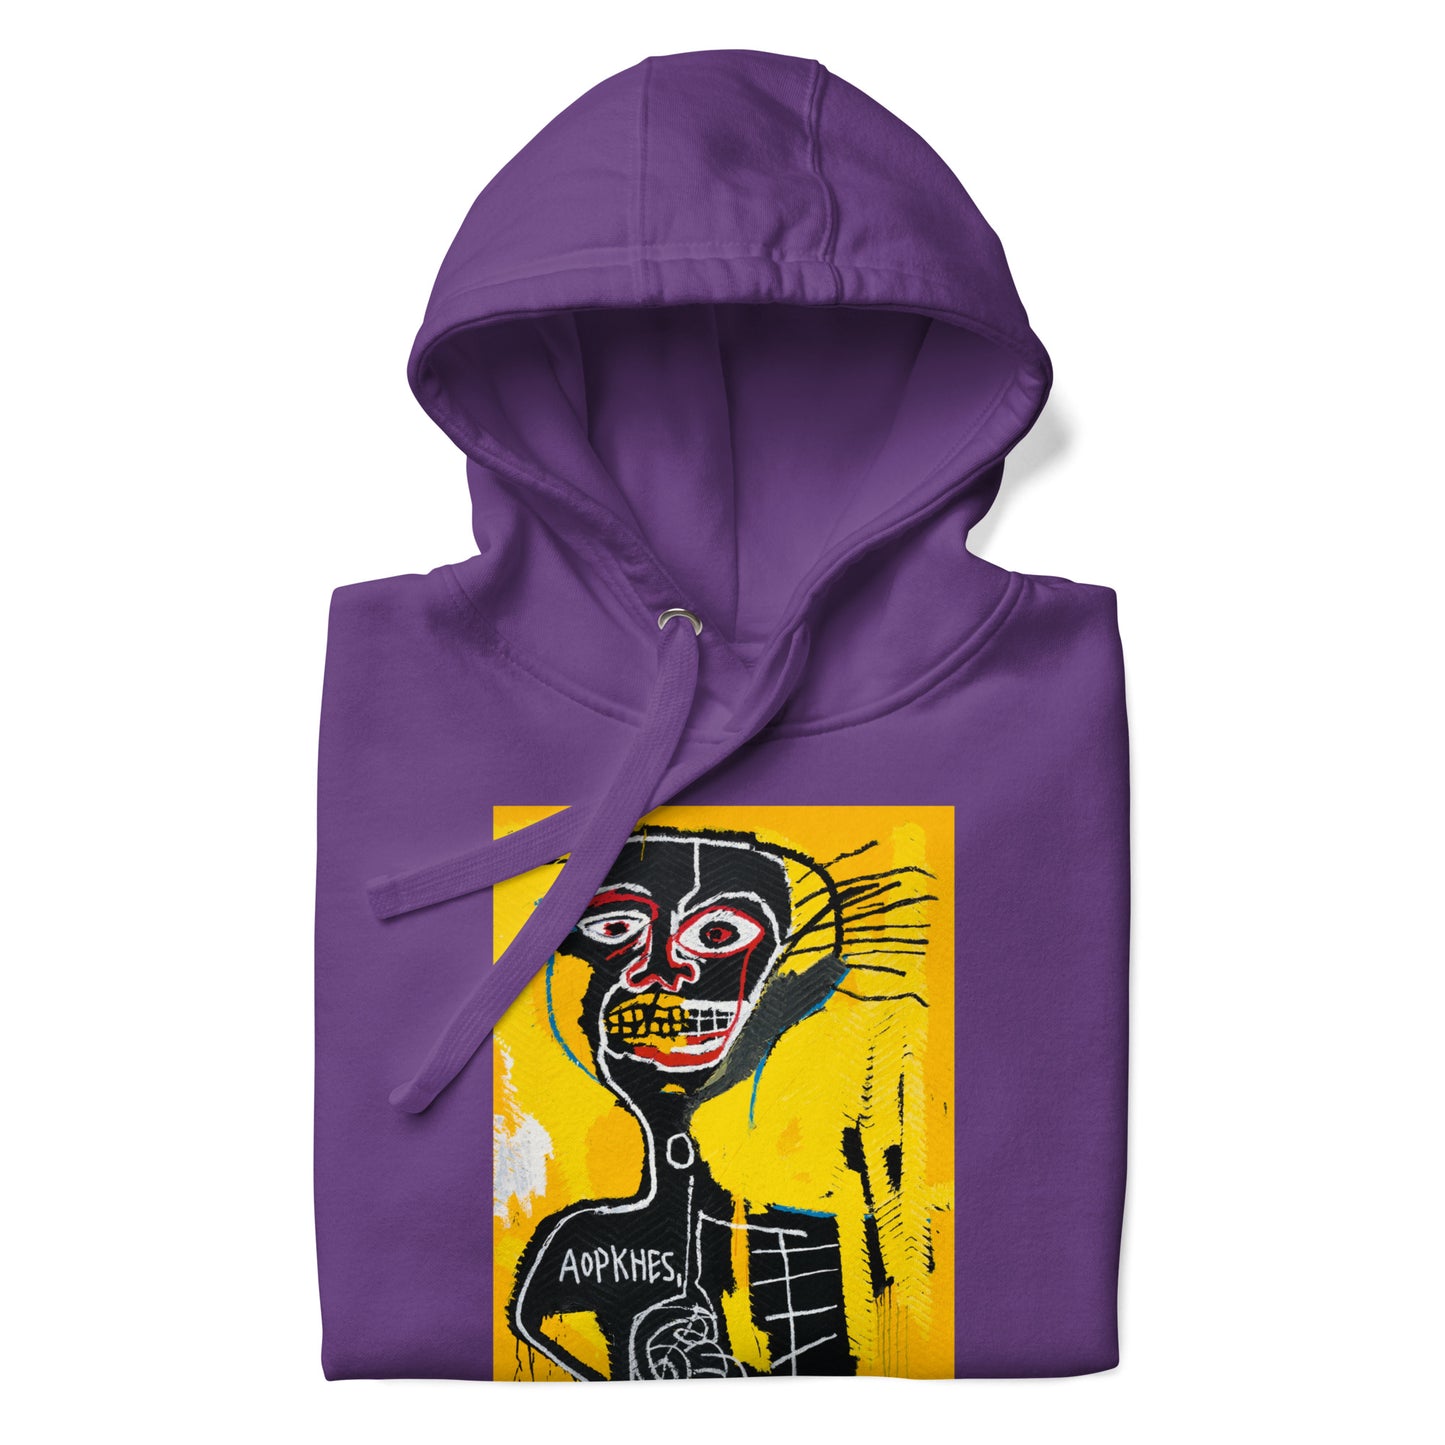 Jean-Michel Basquiat "Cabeza" Artwork Printed Premium Streetwear Sweatshirt Hoodie Purple